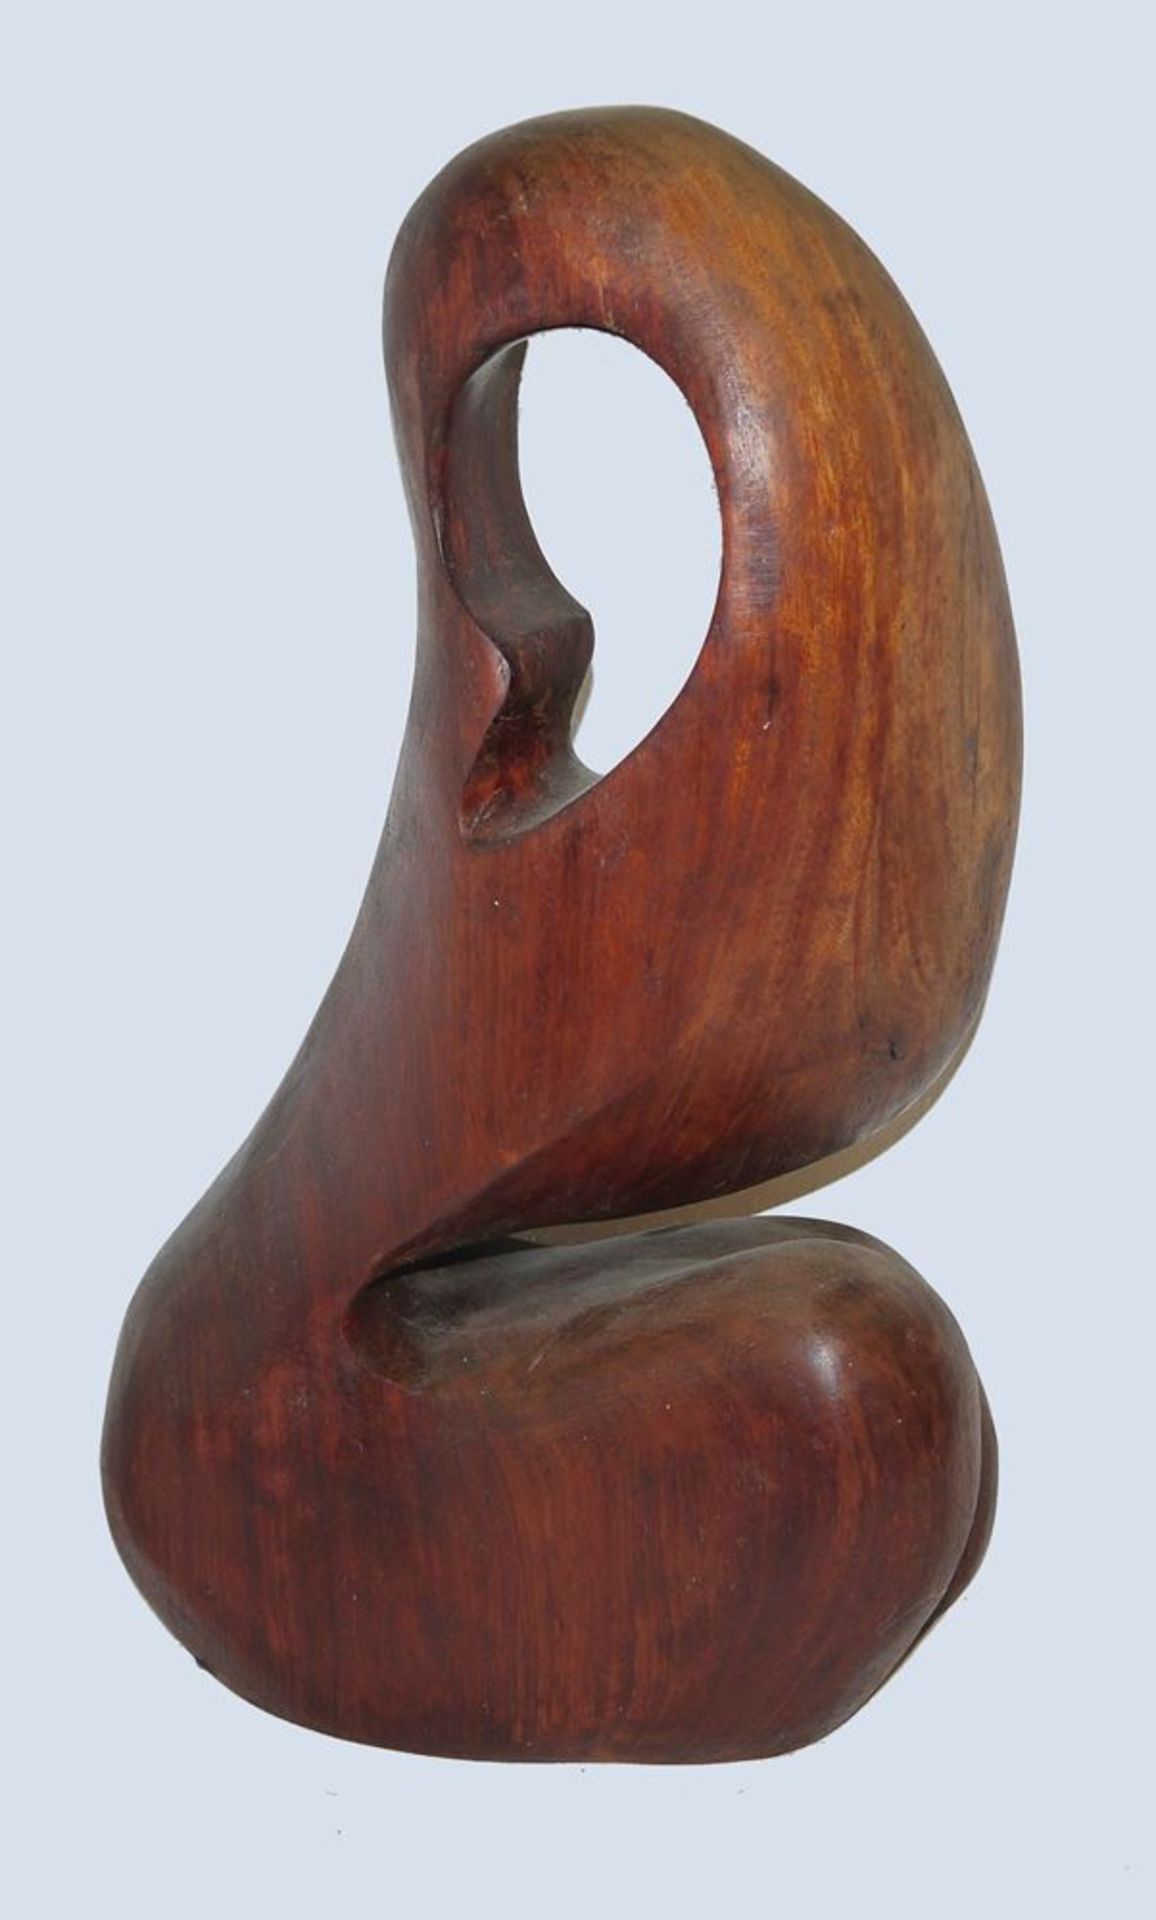 Ortrud Heuser-Hickler, Kneeling Figure, wood sculpture from 1991 - Image 2 of 3